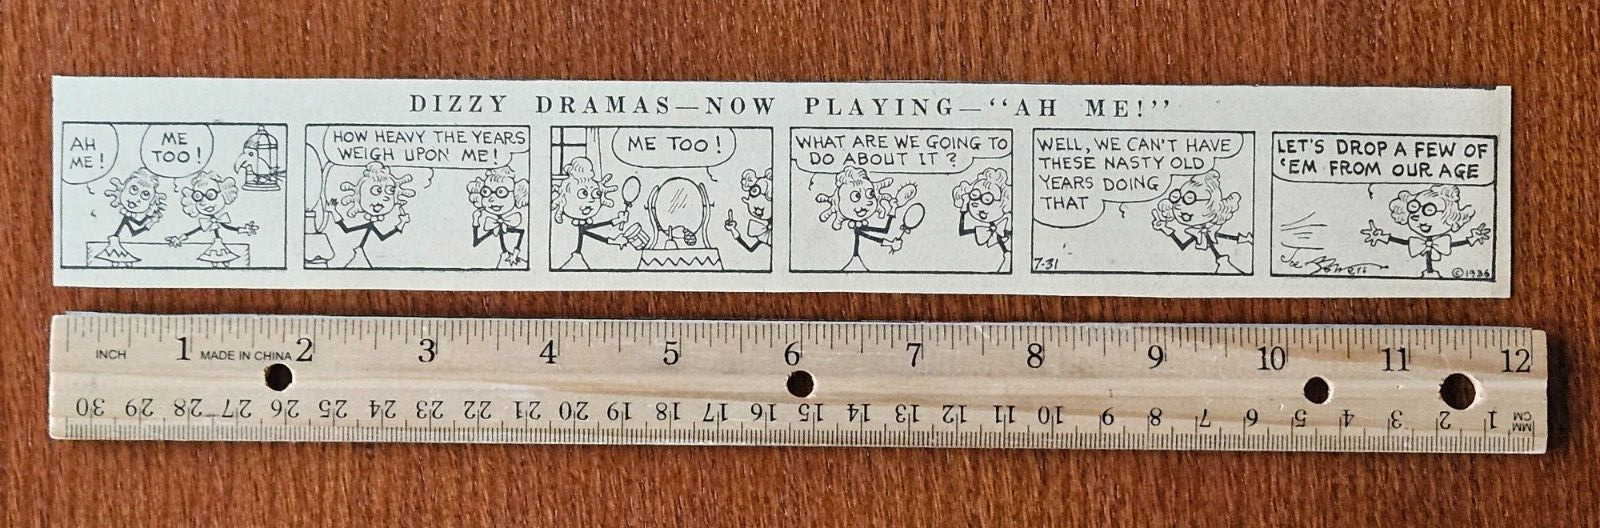 DIZZY DRAMAS NOW PLAYING AH ME 7-31 Comic from 1936 Philadelphia Newspaper